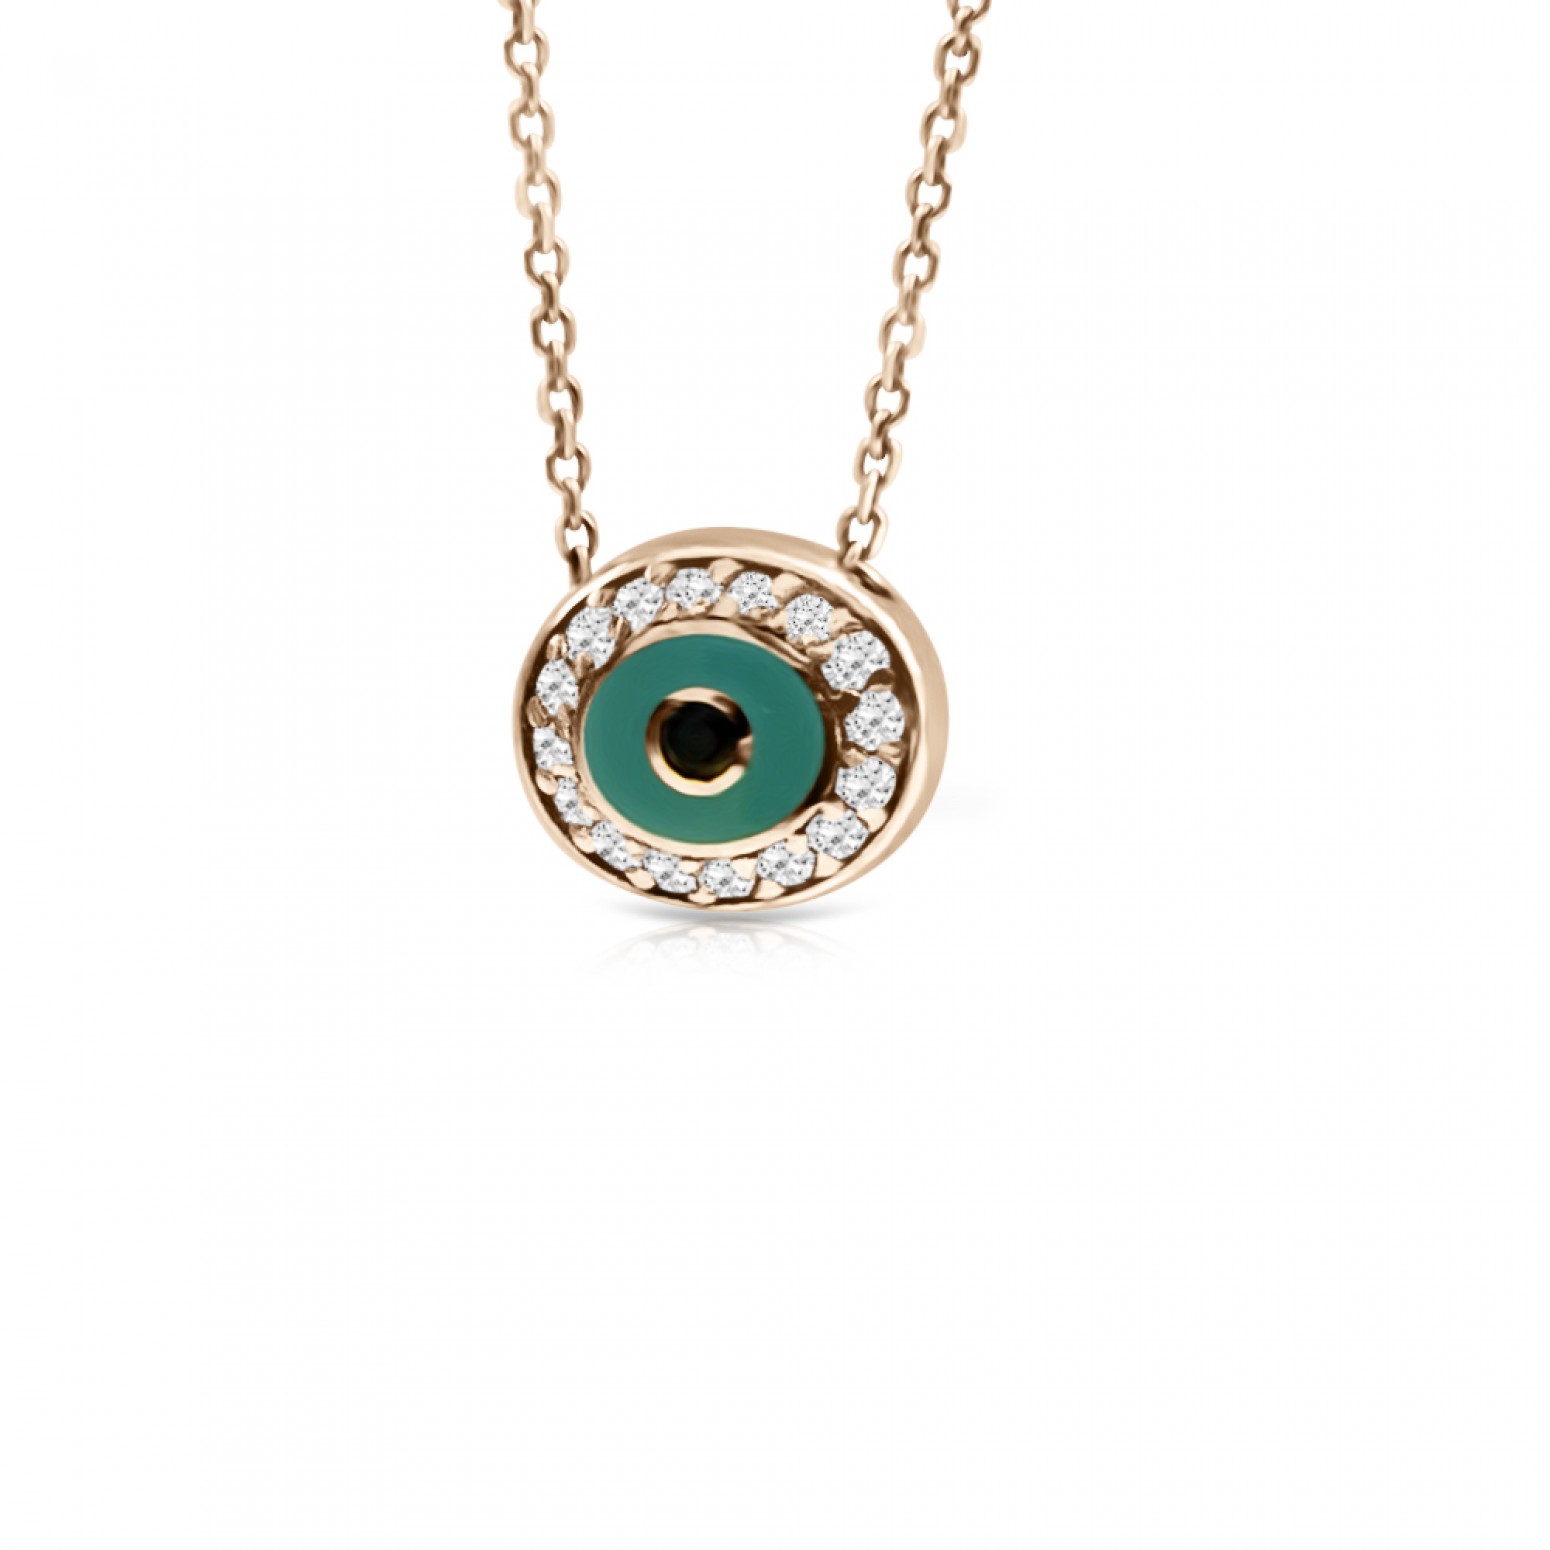 Eye necklace, Κ14 pink gold with zircon and enamel, ko4263 NECKLACES Κοσμηματα - chrilia.gr